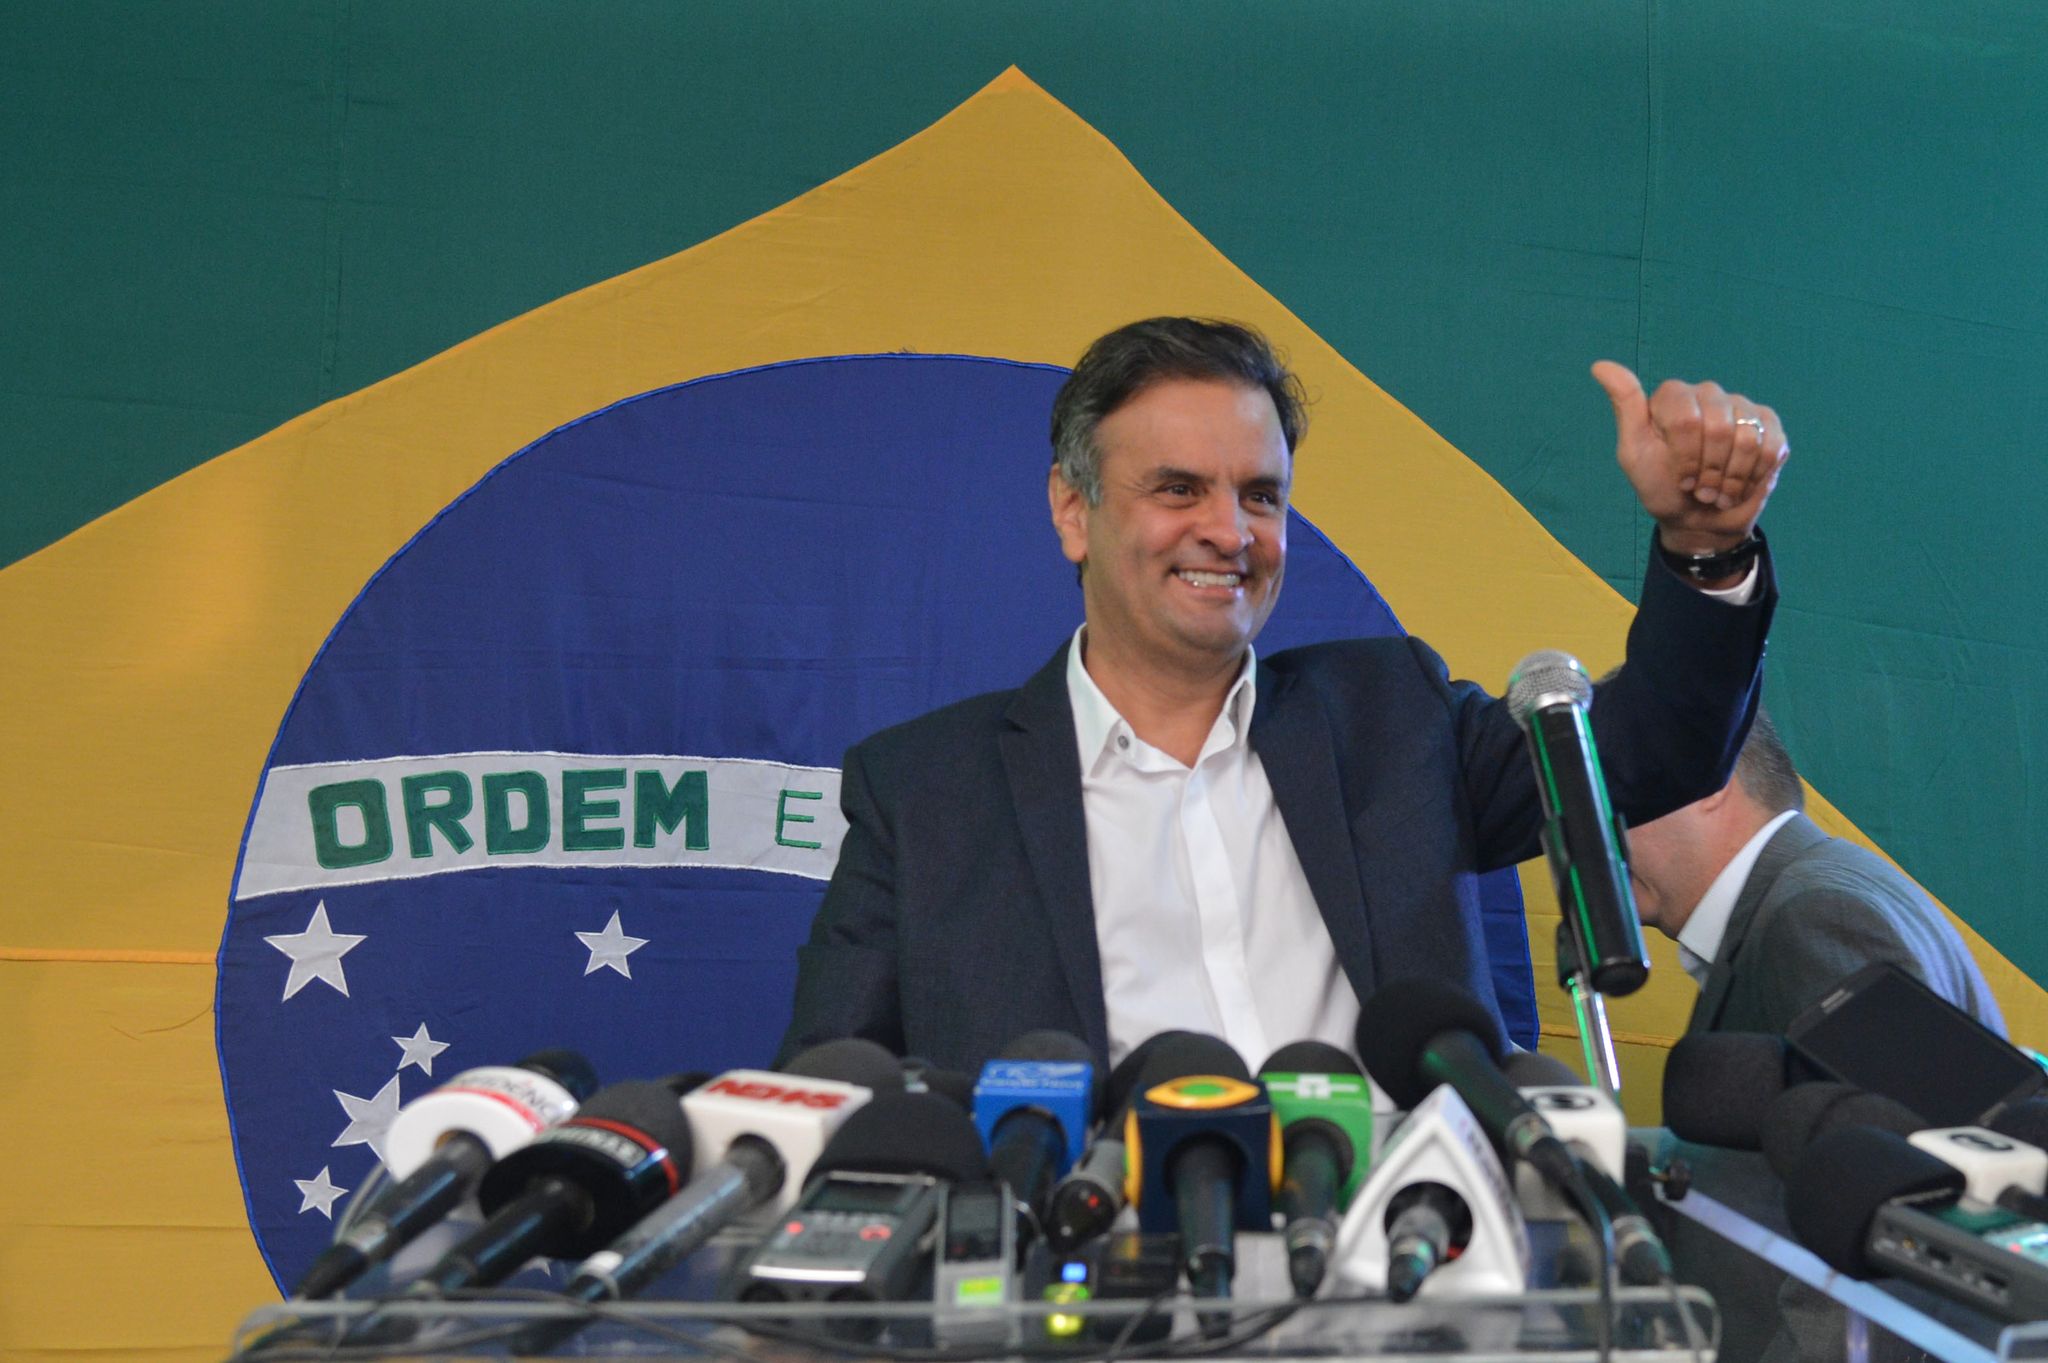 PSDB candidate Aecio Neves